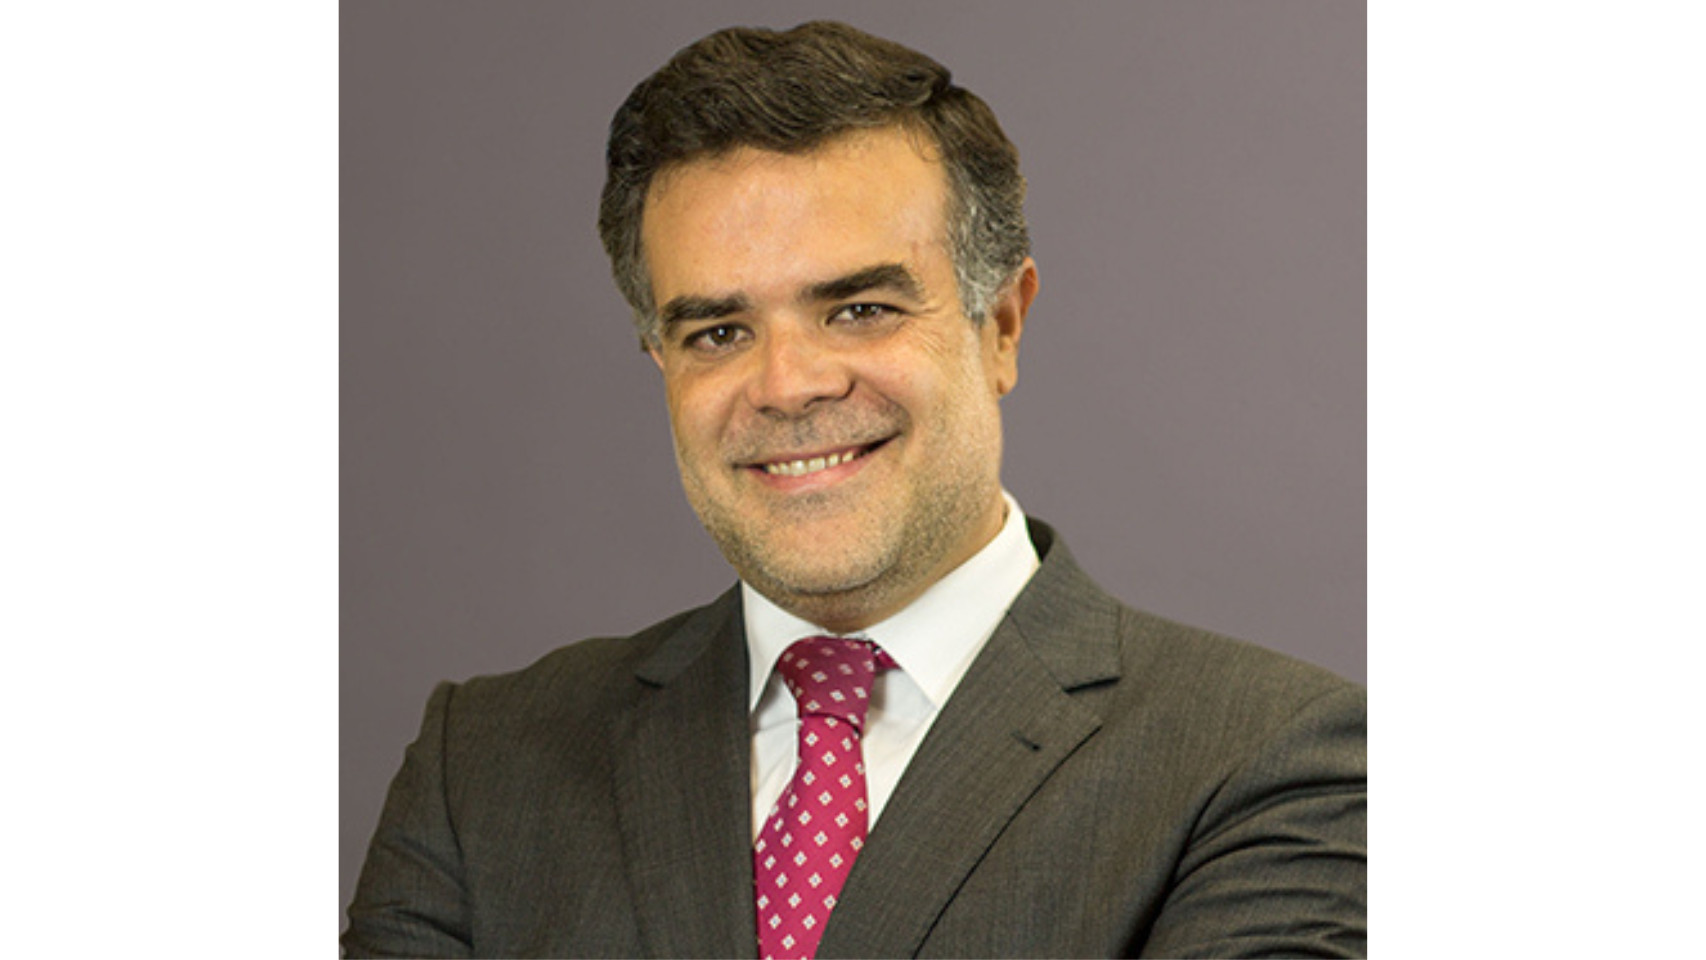 Augusto Baena